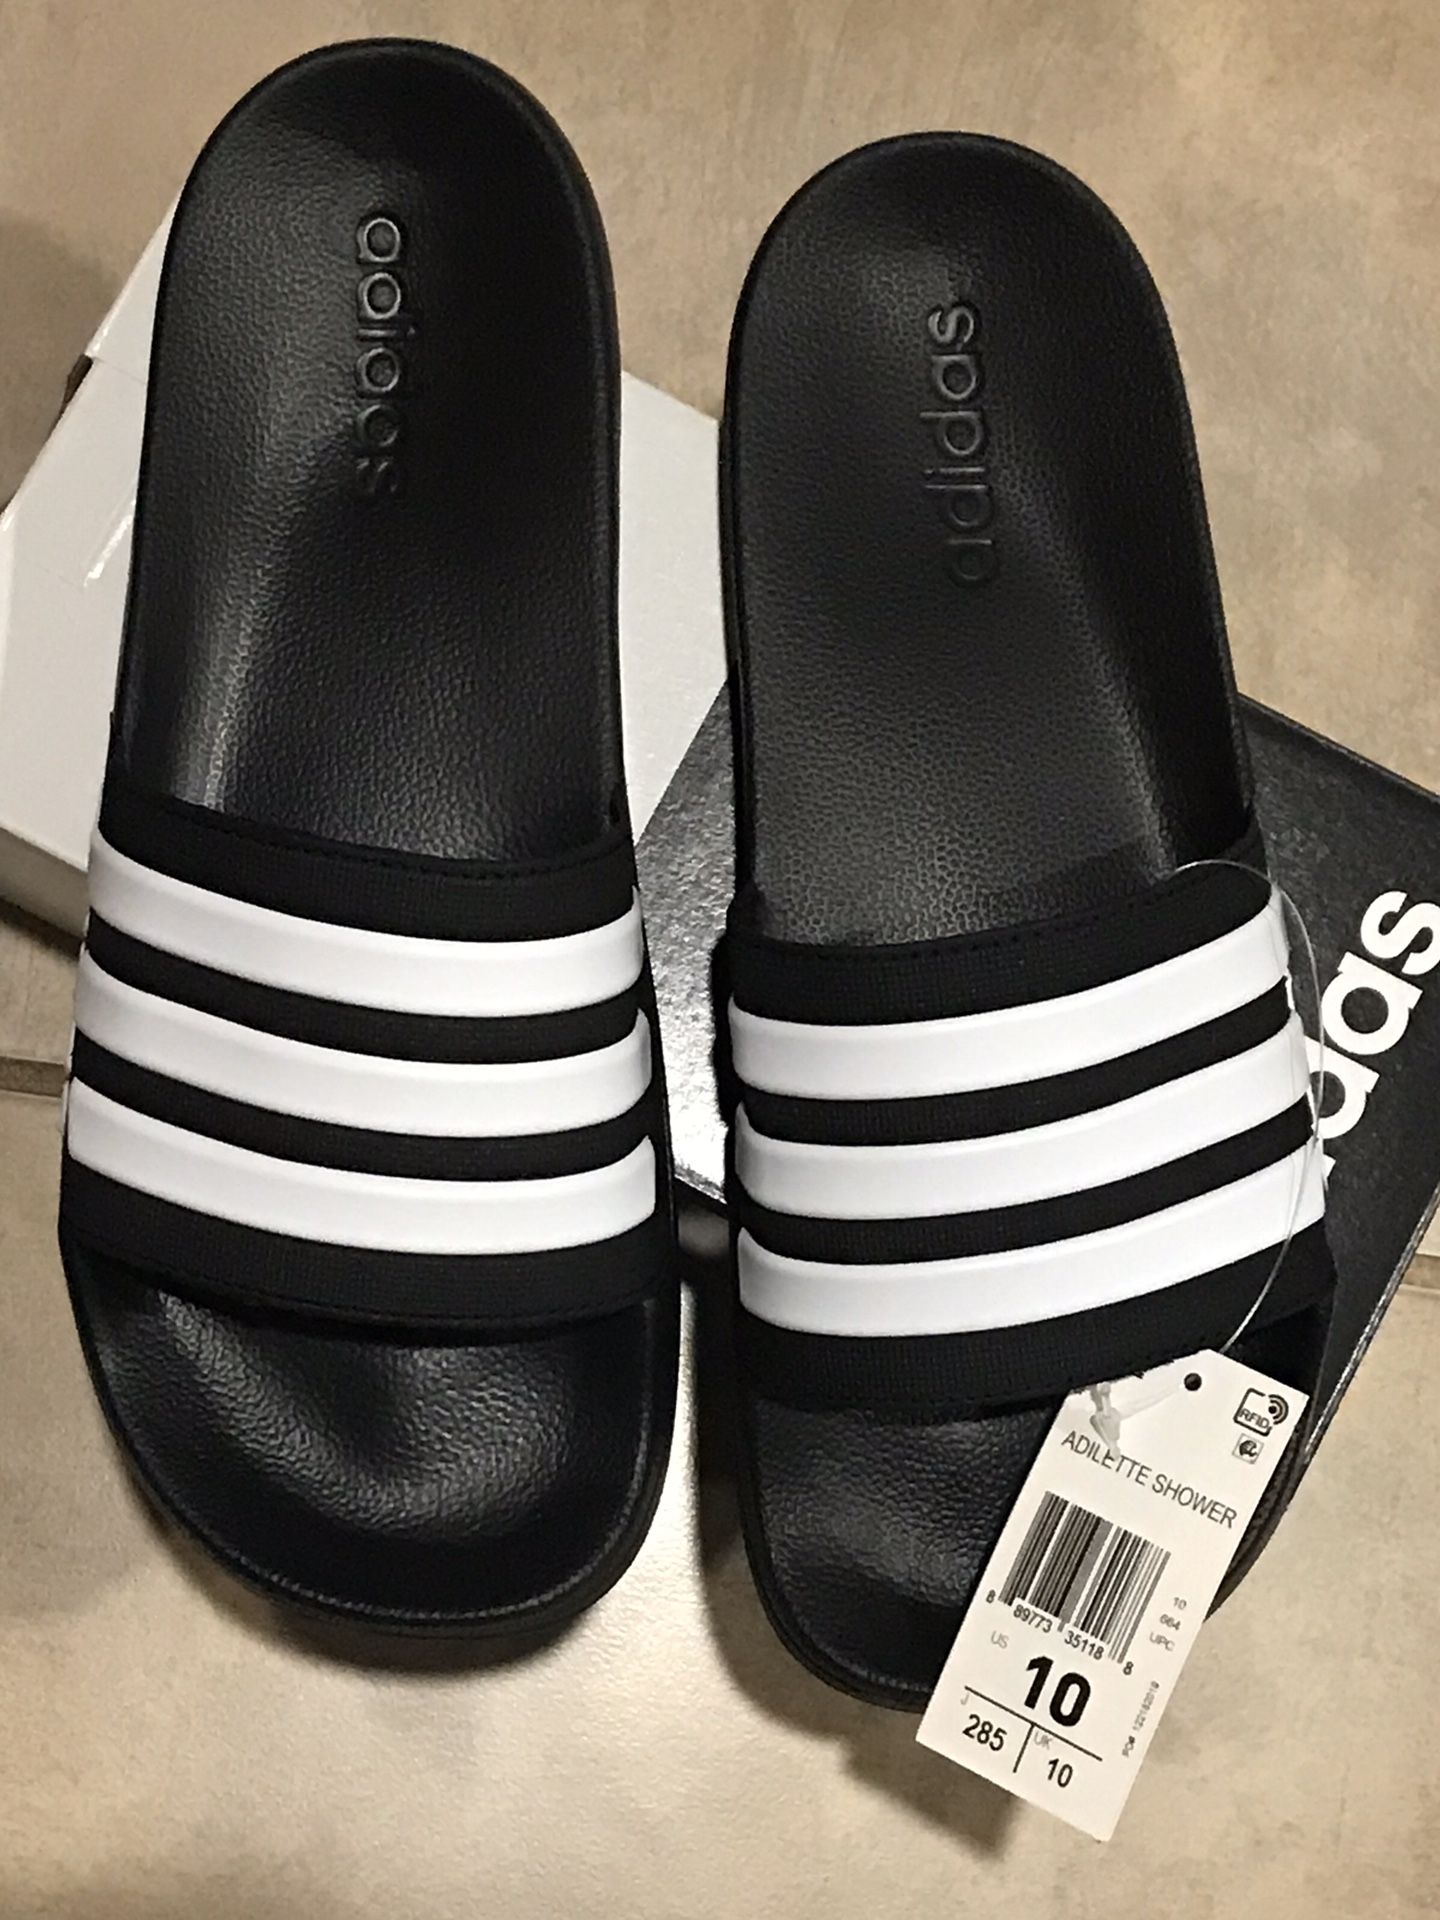 Brand new Adidas Slides Size 10 men’s